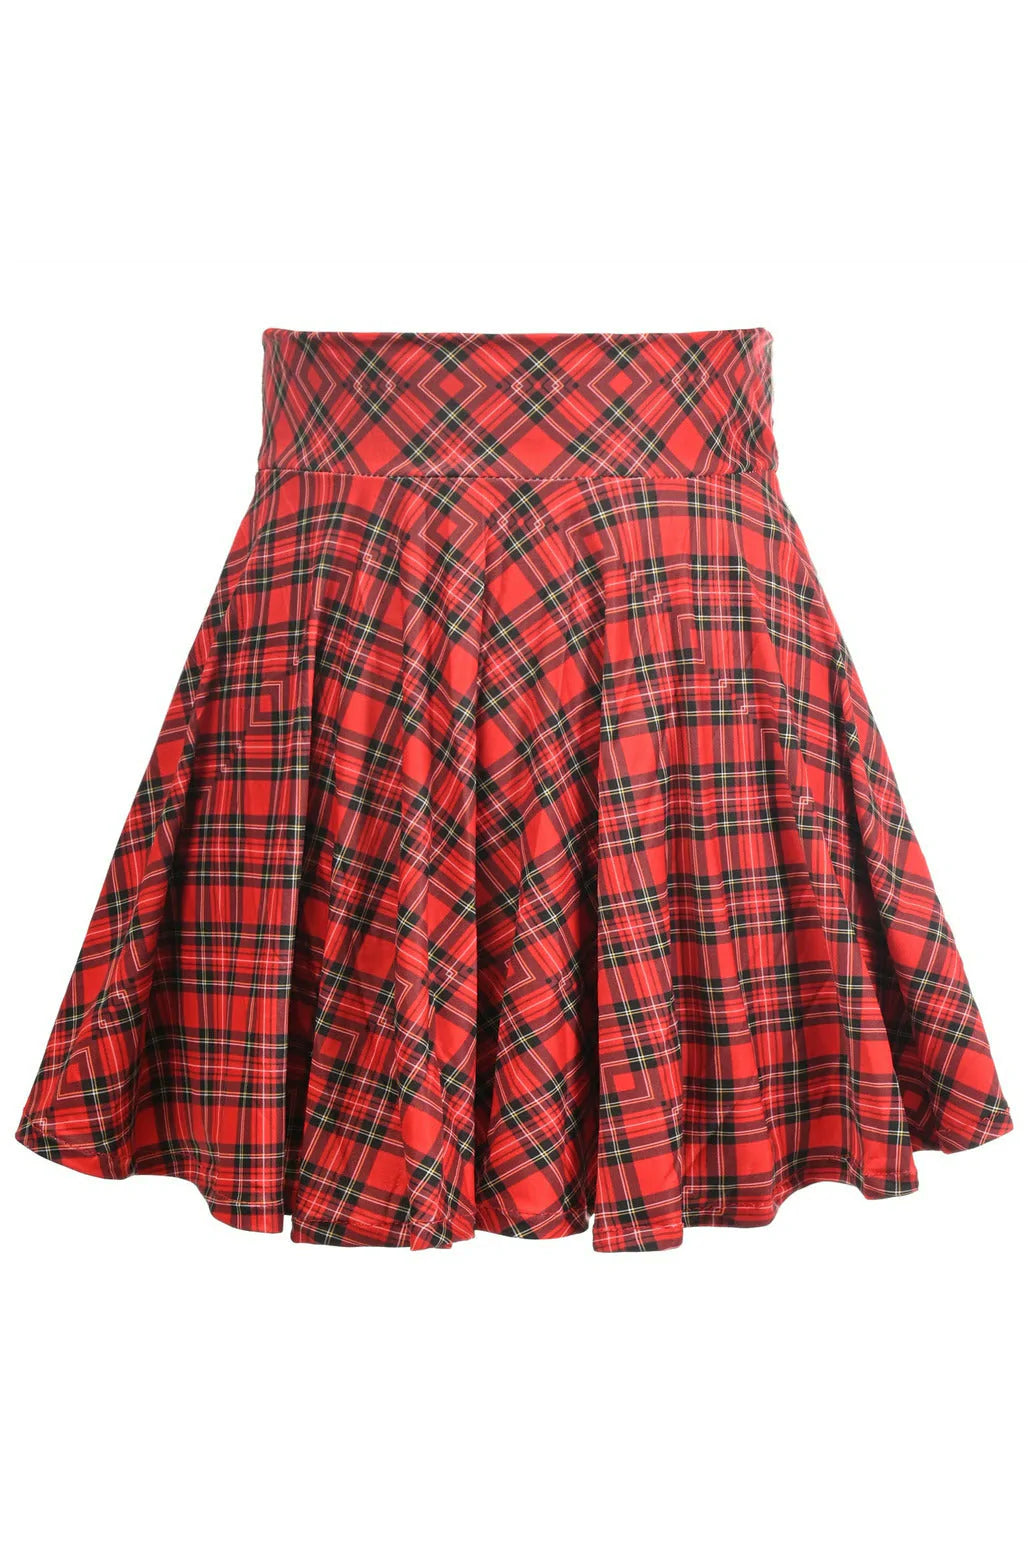 Red Plaid Stretch Lycra Skirt